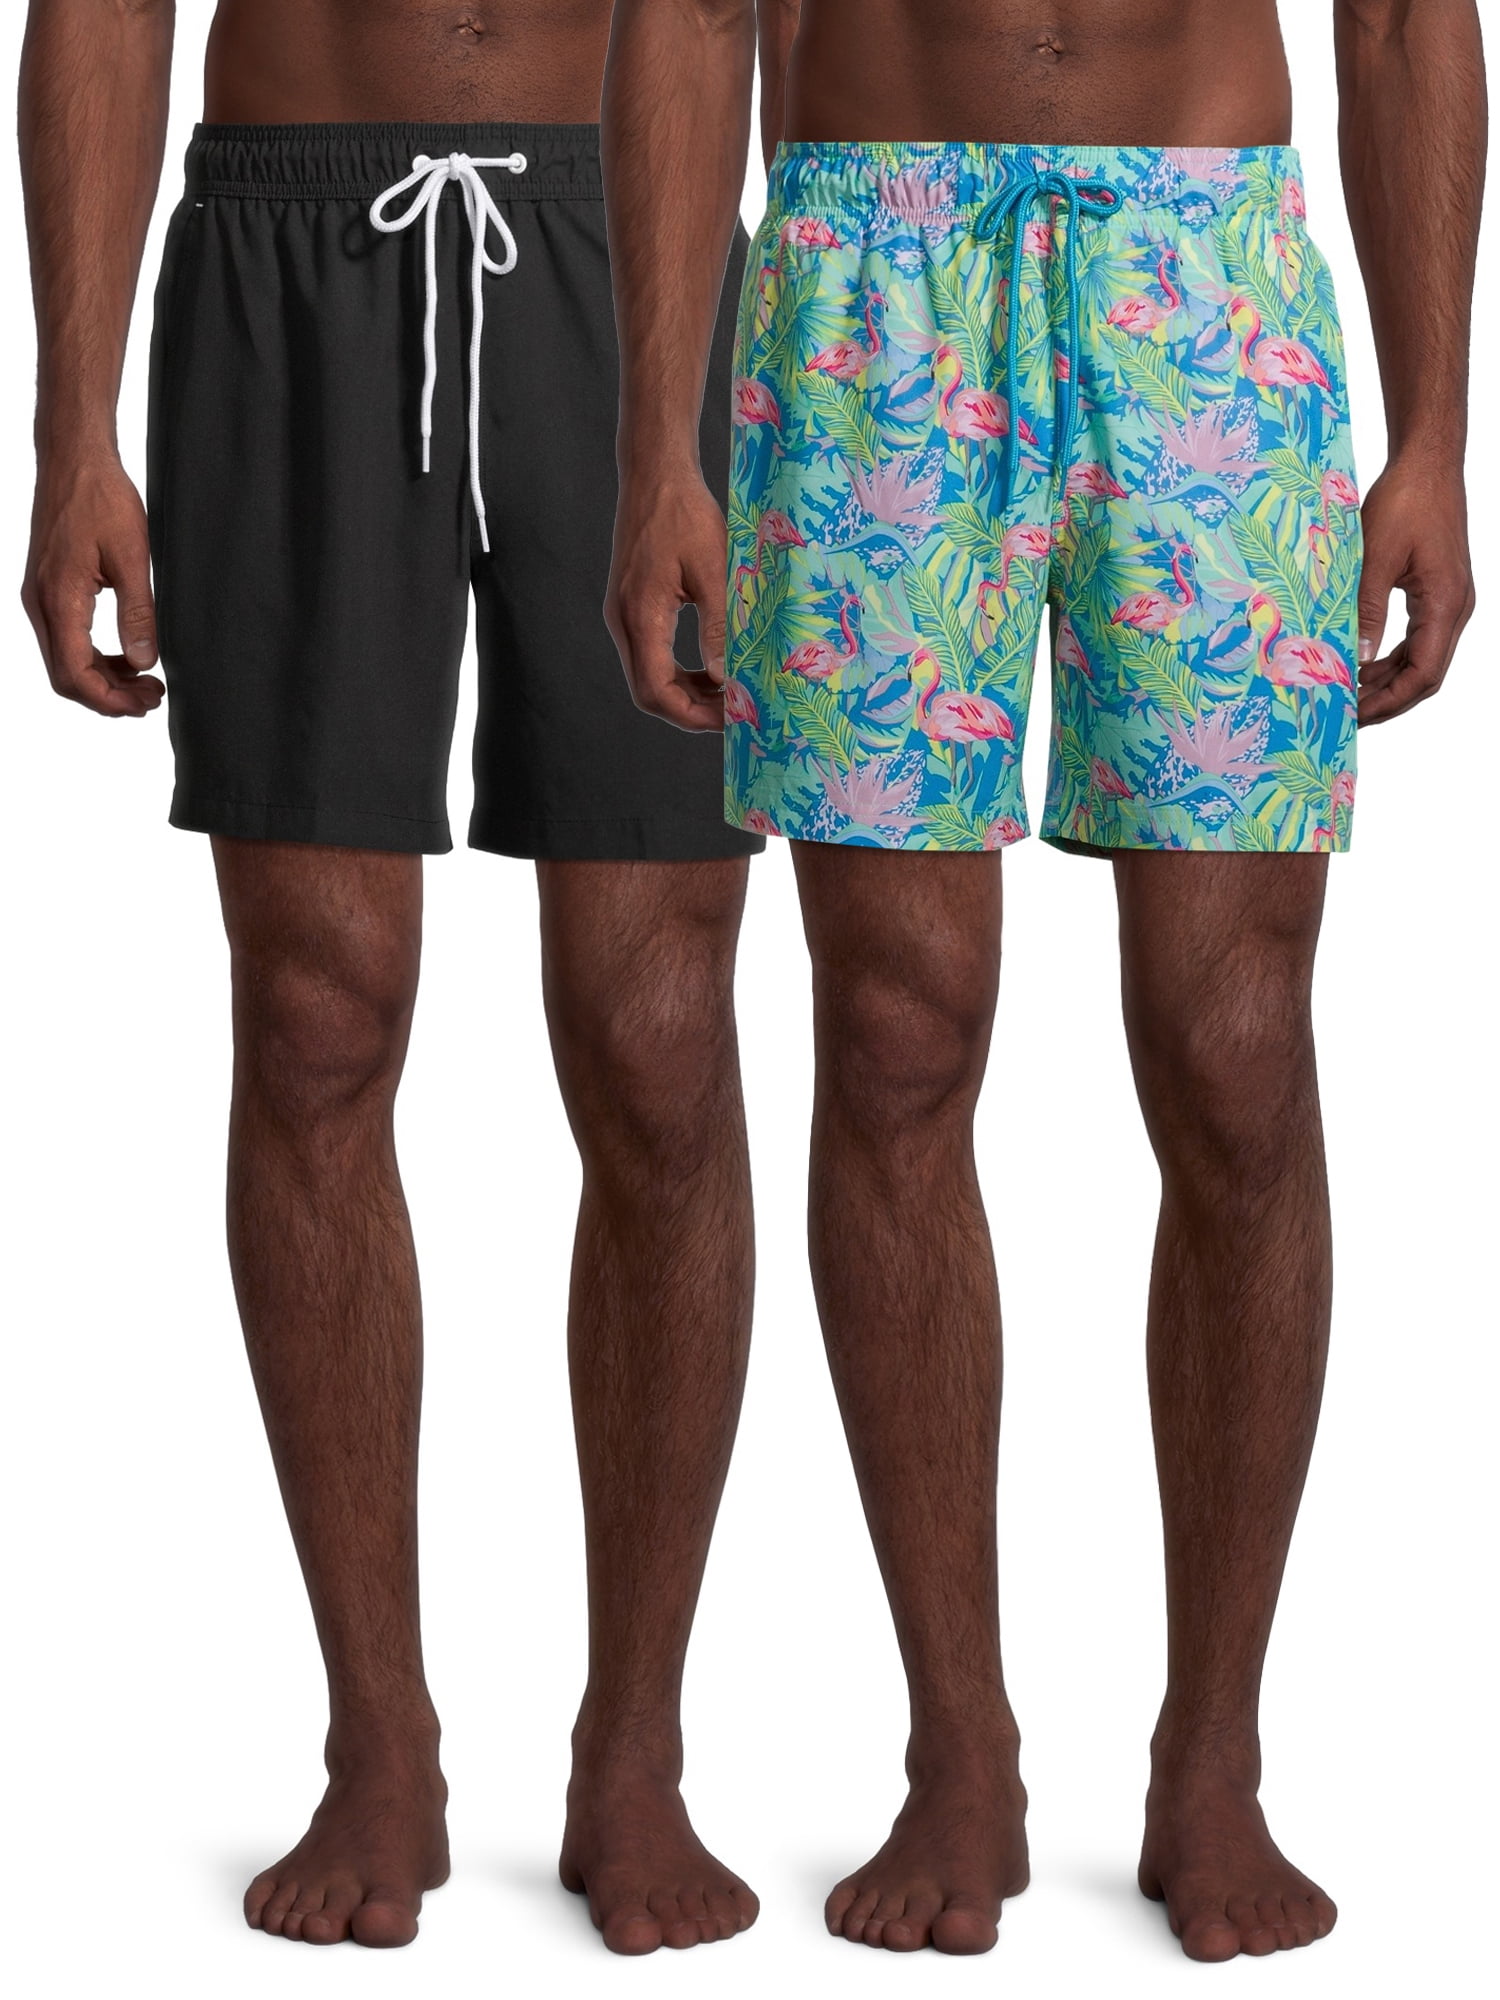 HFSST White Wall Swan Black Moat Men Kid Male Summer Swimming Pockets Trunks Beachwear Asual Shorts Pants Mesh 